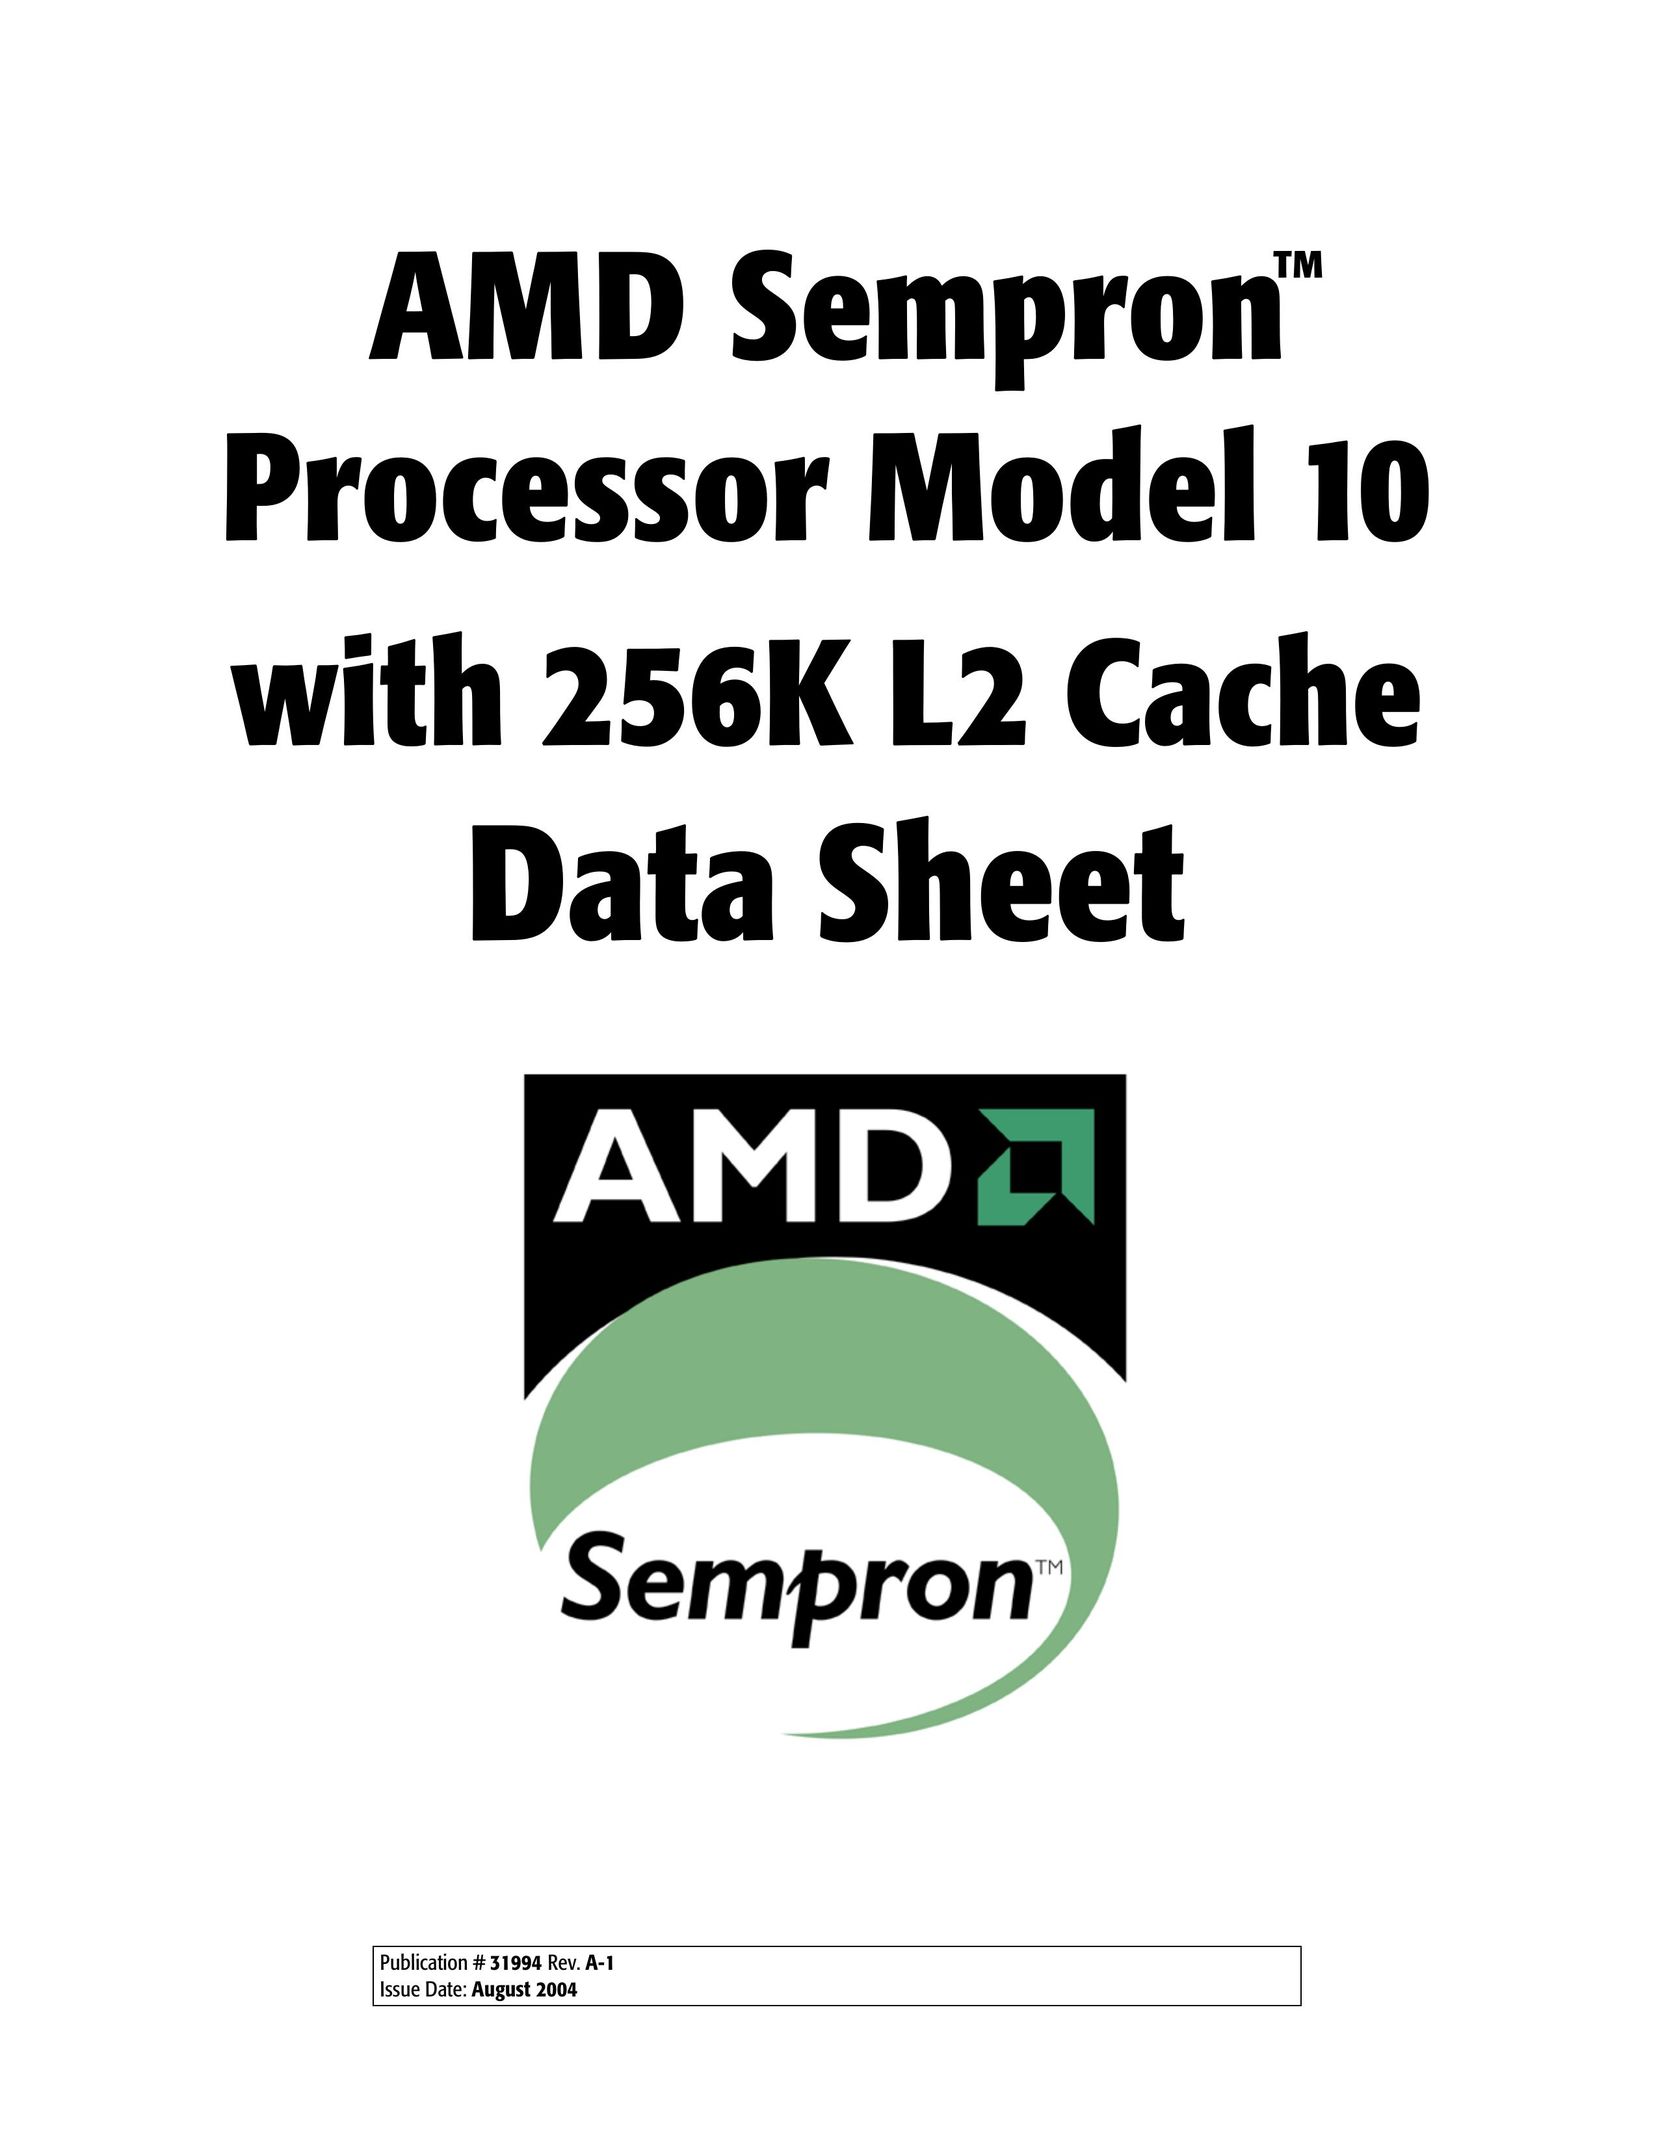 AMD 10 Computer Hardware User Manual